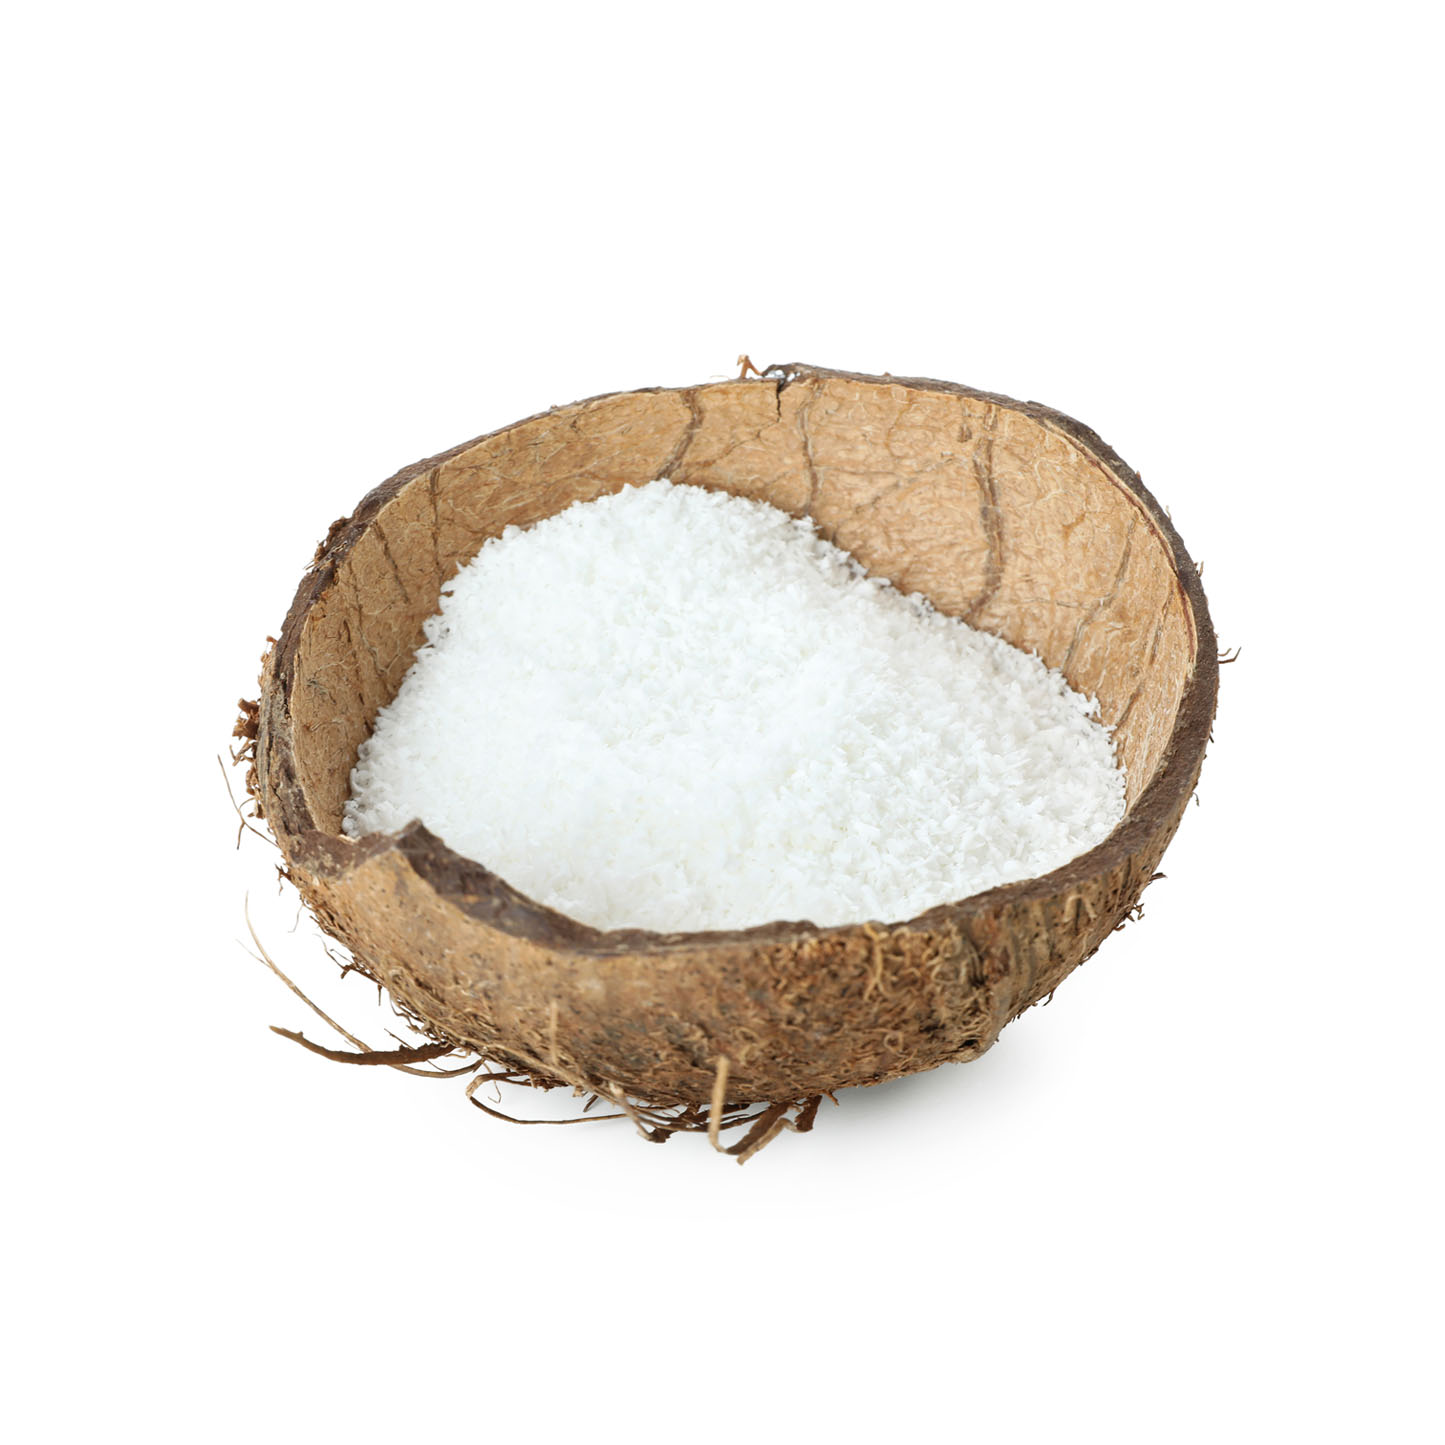 Coconut MCT powder